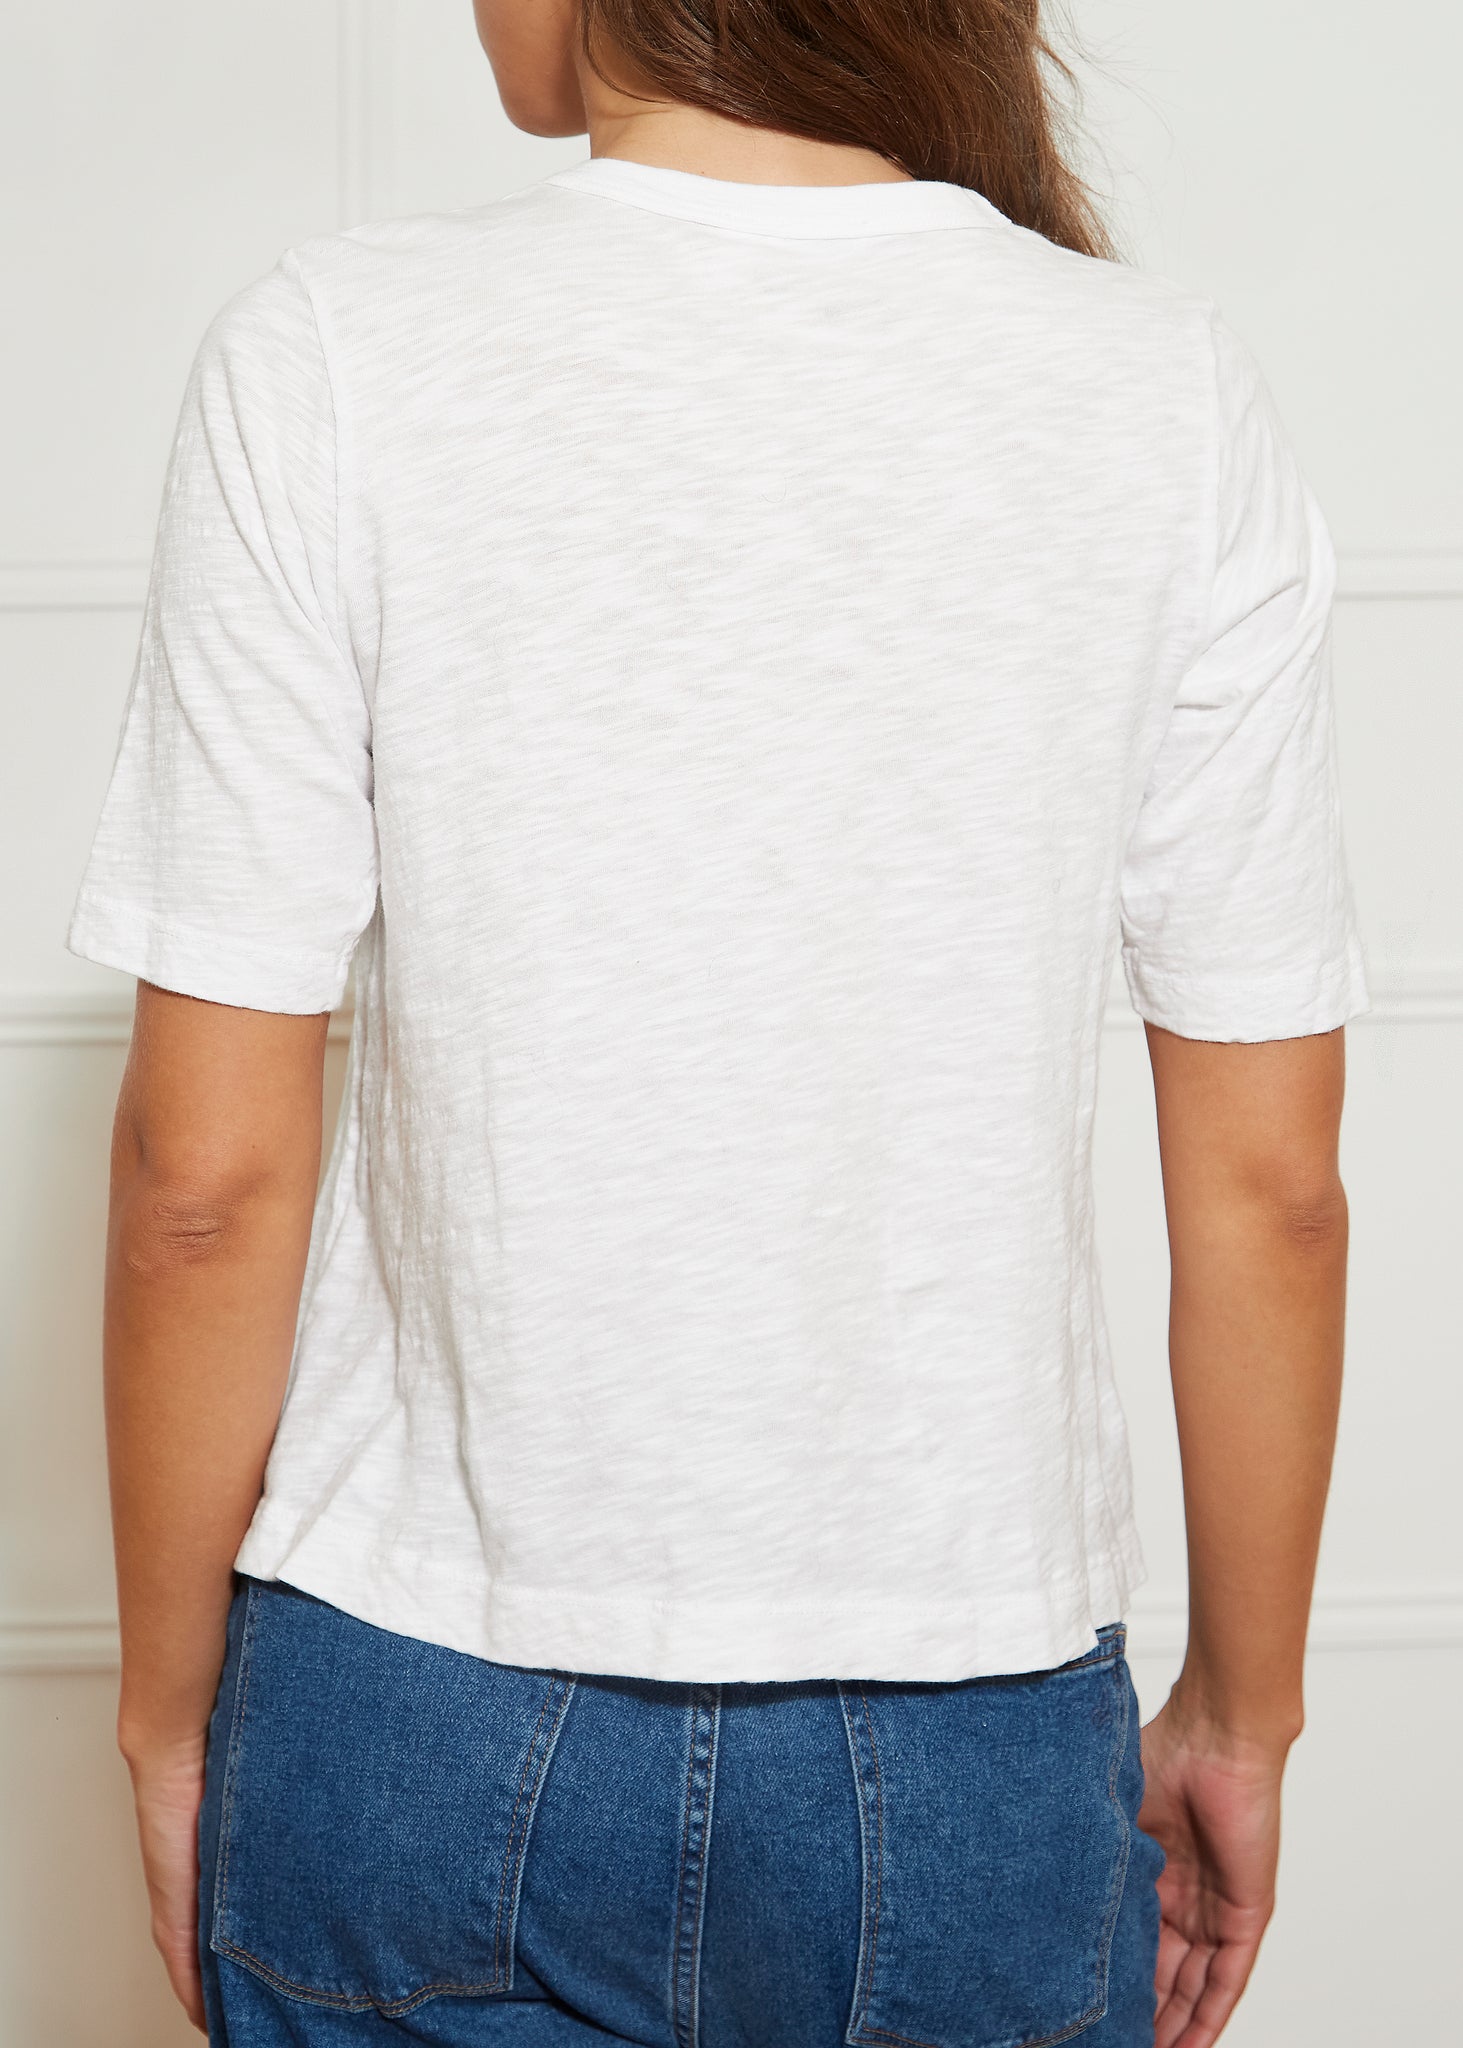 Shrunken White Round Neck Short Sleeve T Shirt